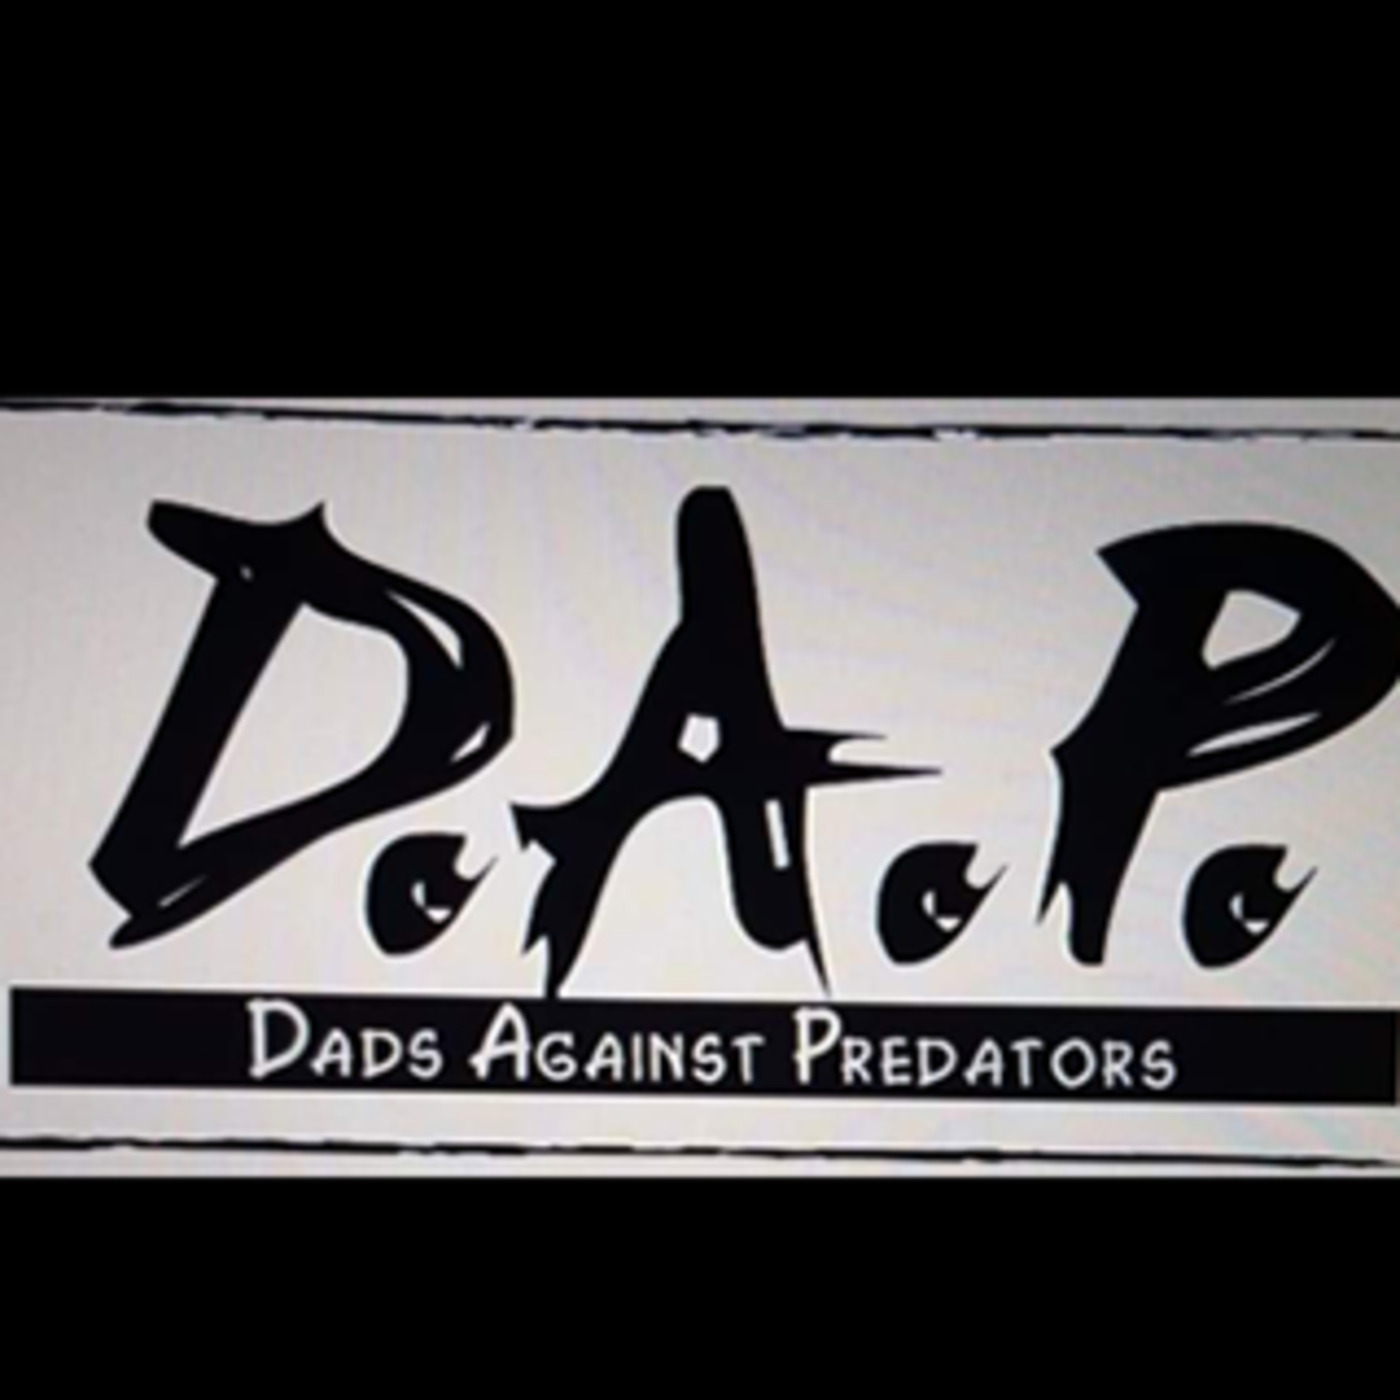 Episode 515: DAP Dads Against Predators Cofounder and Army Vet Jay Carnicom